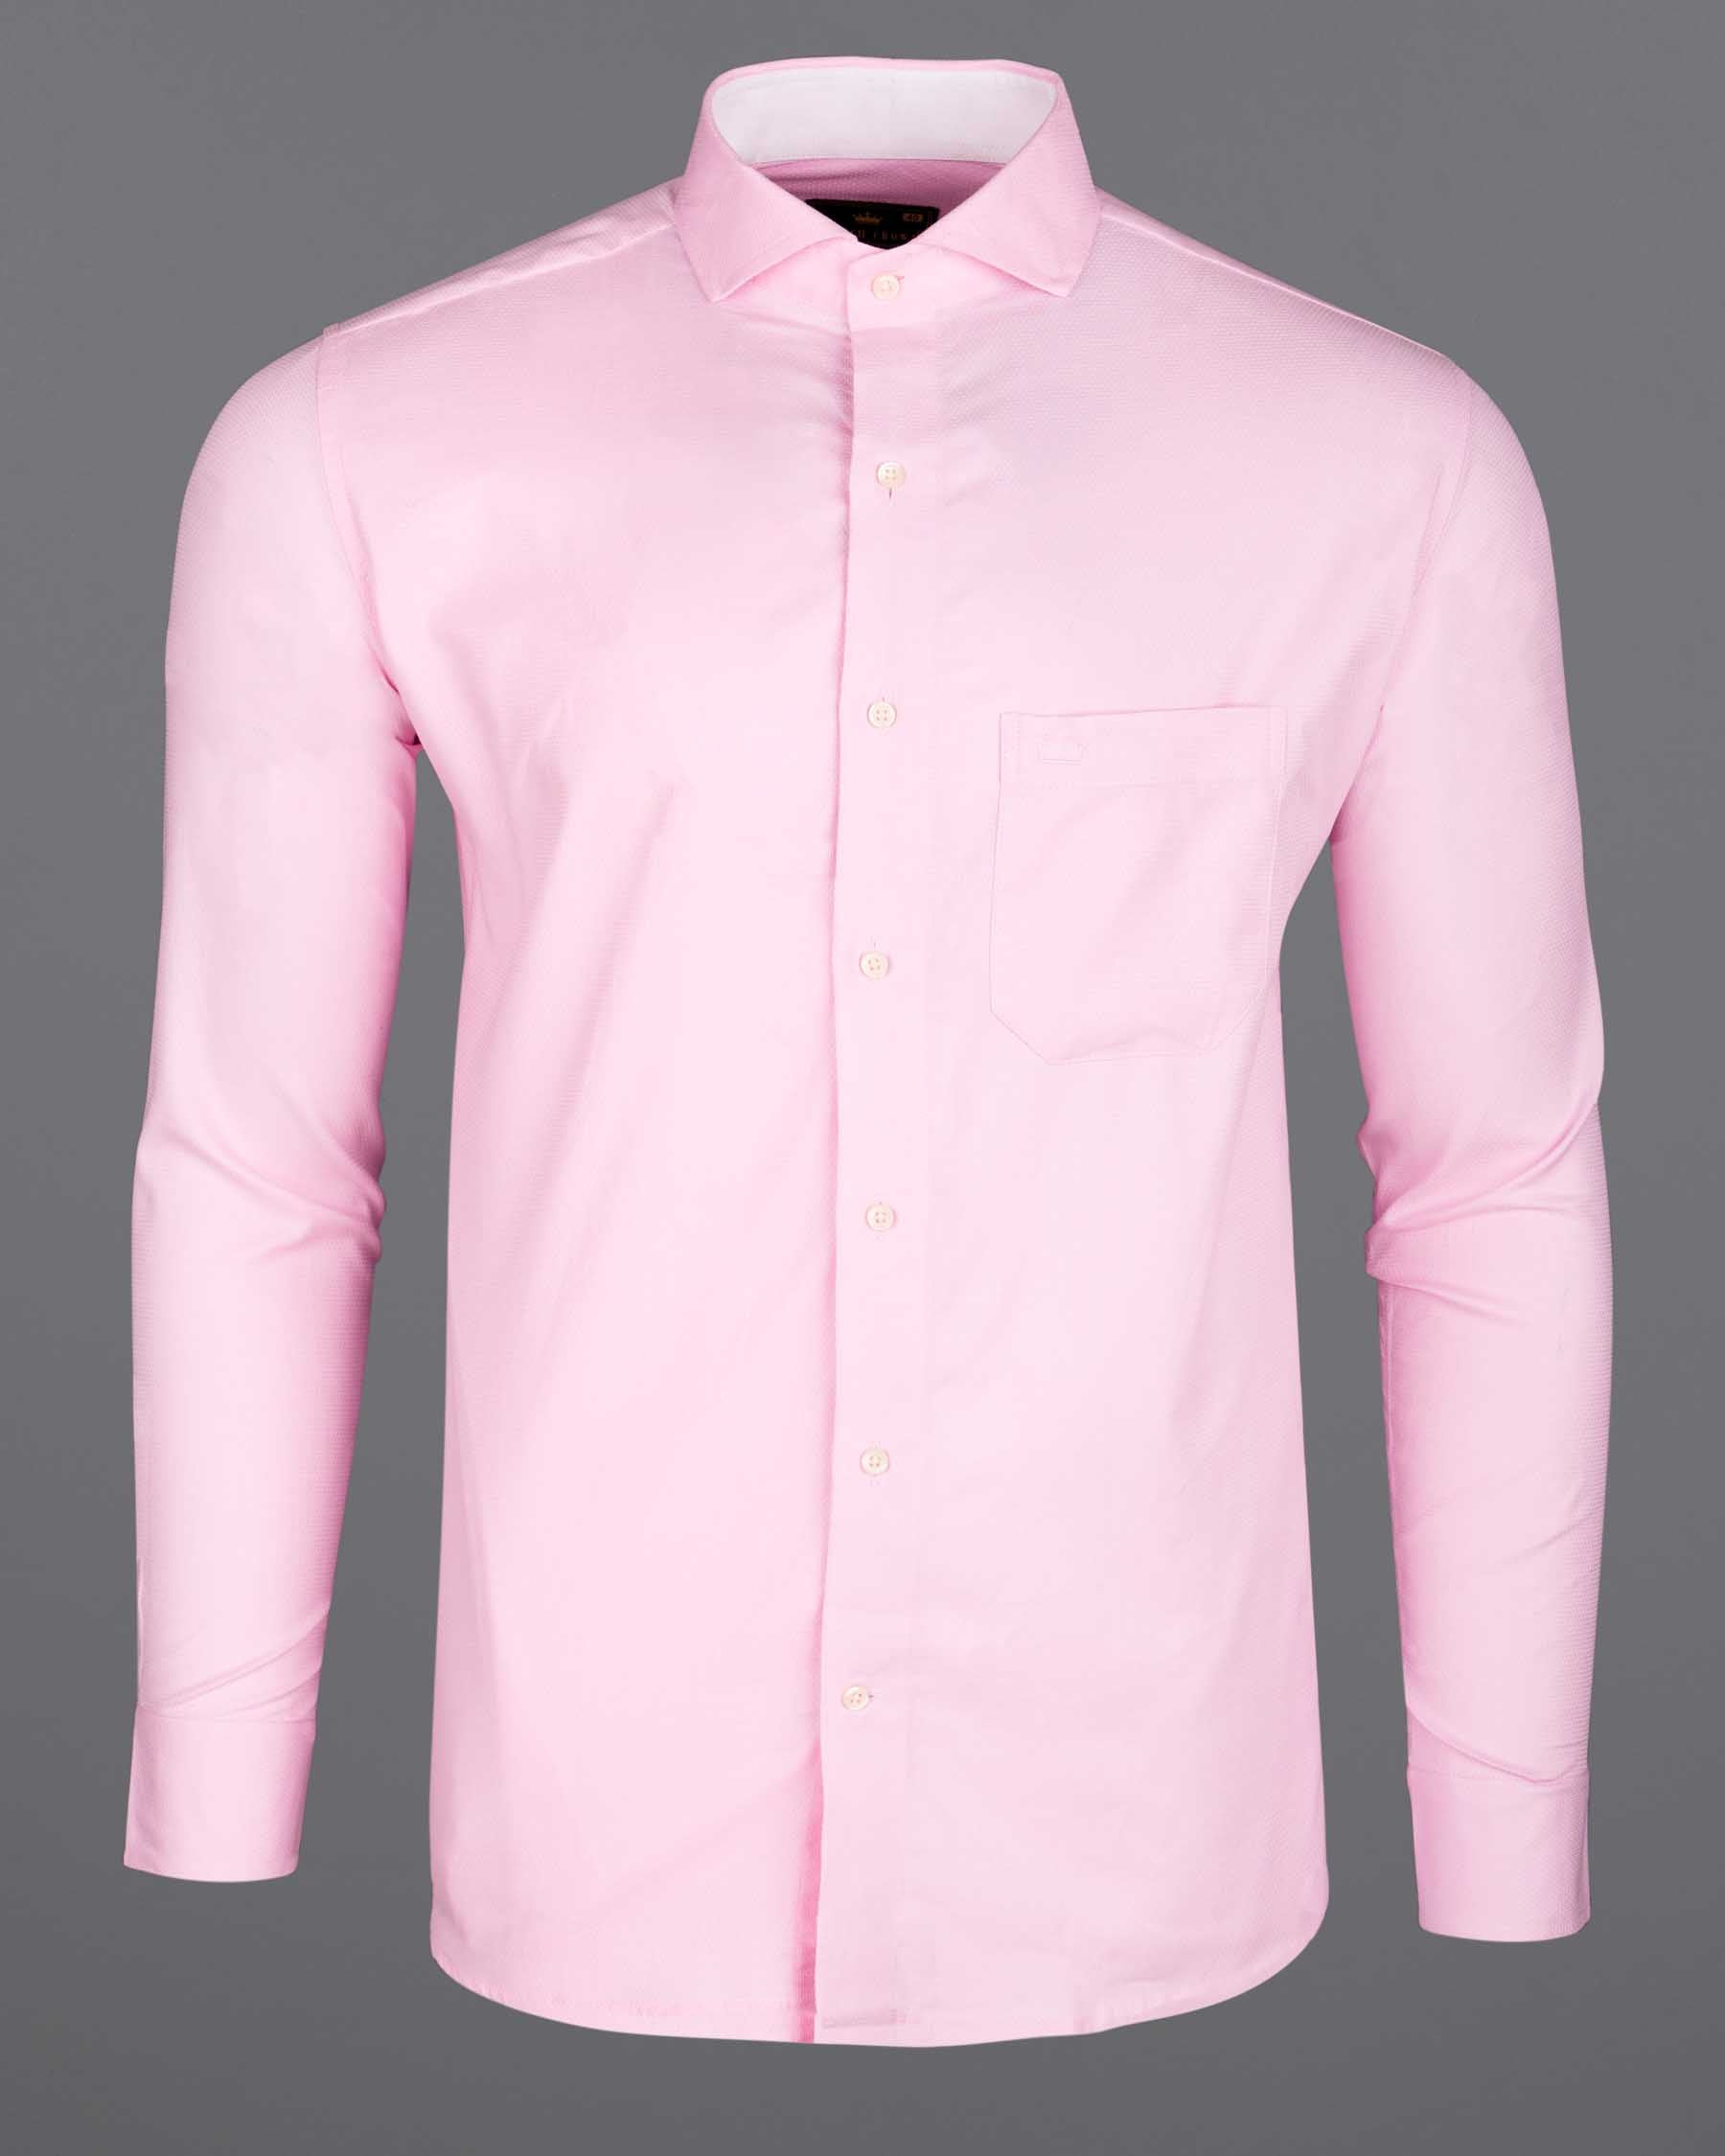 Chantilly Pink Dobby Textured Premium Giza Cotton Shirt 6207-CA-CLOTH-P-38, 6207-CA-CLOTH-P-H-38, 6207-CA-CLOTH-P-39, 6207-CA-CLOTH-P-H-39, 6207-CA-CLOTH-P-40, 6207-CA-CLOTH-P-H-40, 6207-CA-CLOTH-P-42, 6207-CA-CLOTH-P-H-42, 6207-CA-CLOTH-P-44, 6207-CA-CLOTH-P-H-44, 6207-CA-CLOTH-P-46, 6207-CA-CLOTH-P-H-46, 6207-CA-CLOTH-P-48, 6207-CA-CLOTH-P-H-48, 6207-CA-CLOTH-P-50, 6207-CA-CLOTH-P-H-50, 6207-CA-CLOTH-P-52, 6207-CA-CLOTH-P-H-52